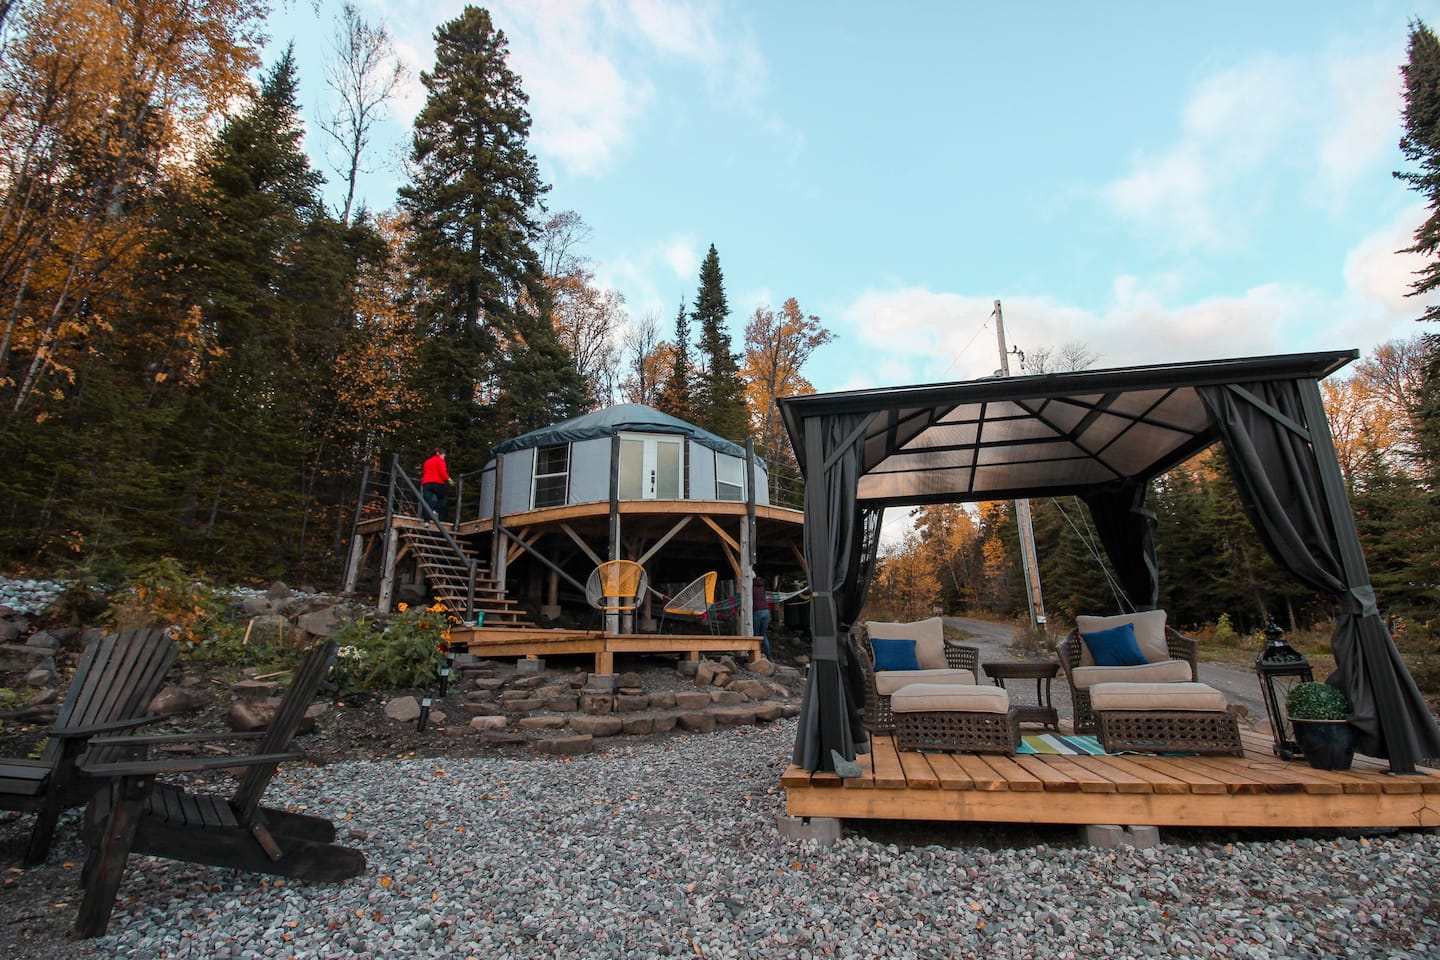 Yurt Glamping in Ontario Canada